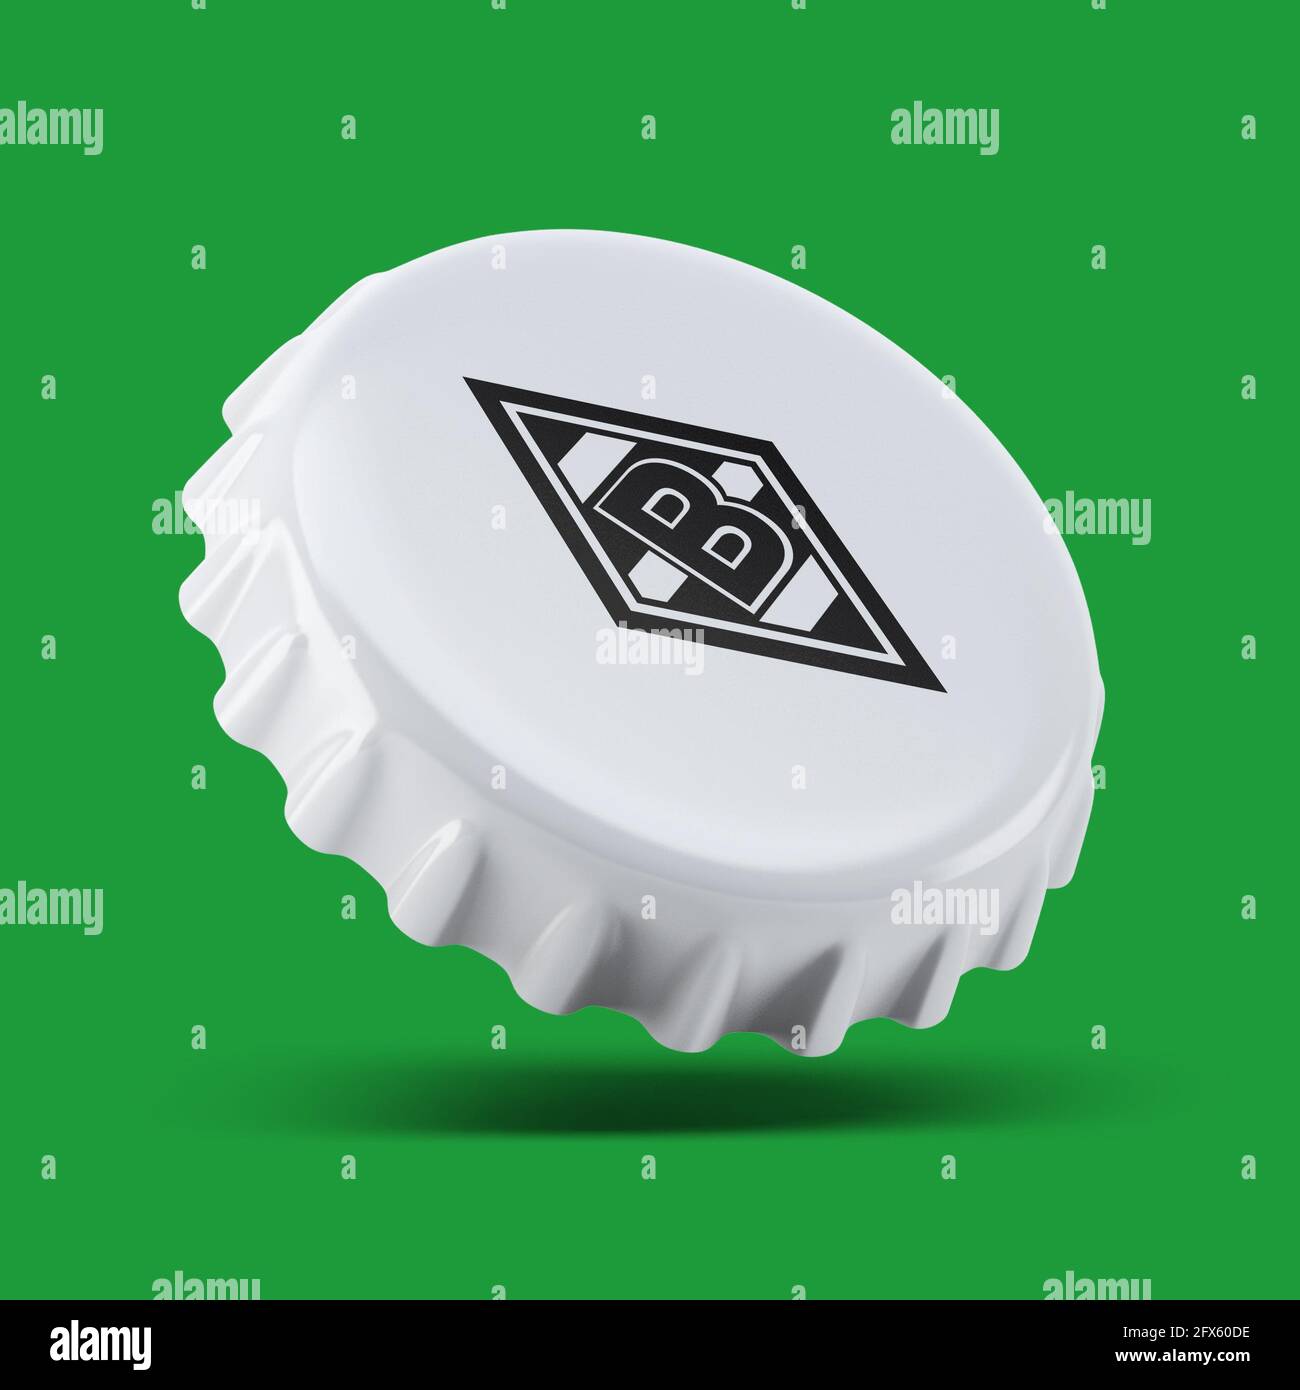 Madrid , SPAIN - May 25, 2021: Borussia Monchengladbach 3D render realistic bottle cap logo on white, illustrative editorial Stock Photo